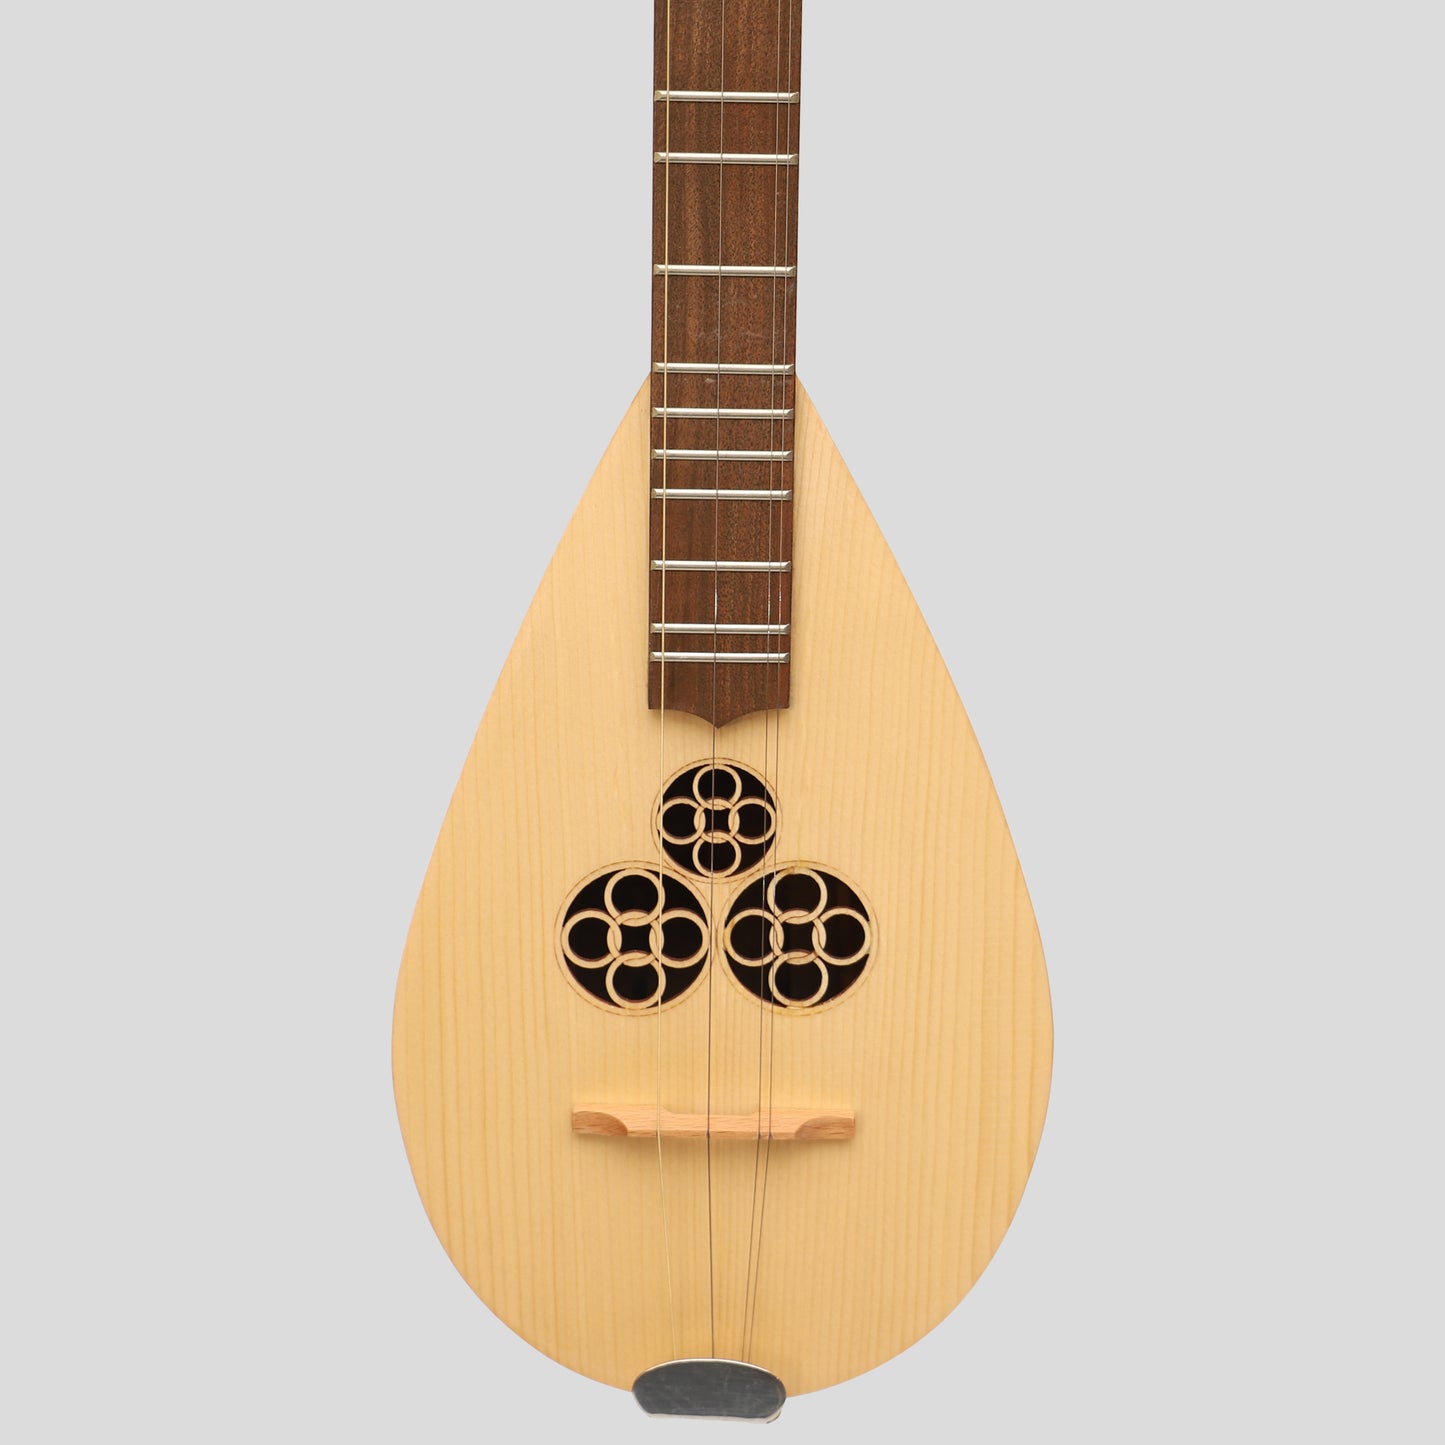 Heartland Wildwood Dulcimer Banjo, 4 String Variegated Walnut Lacewood